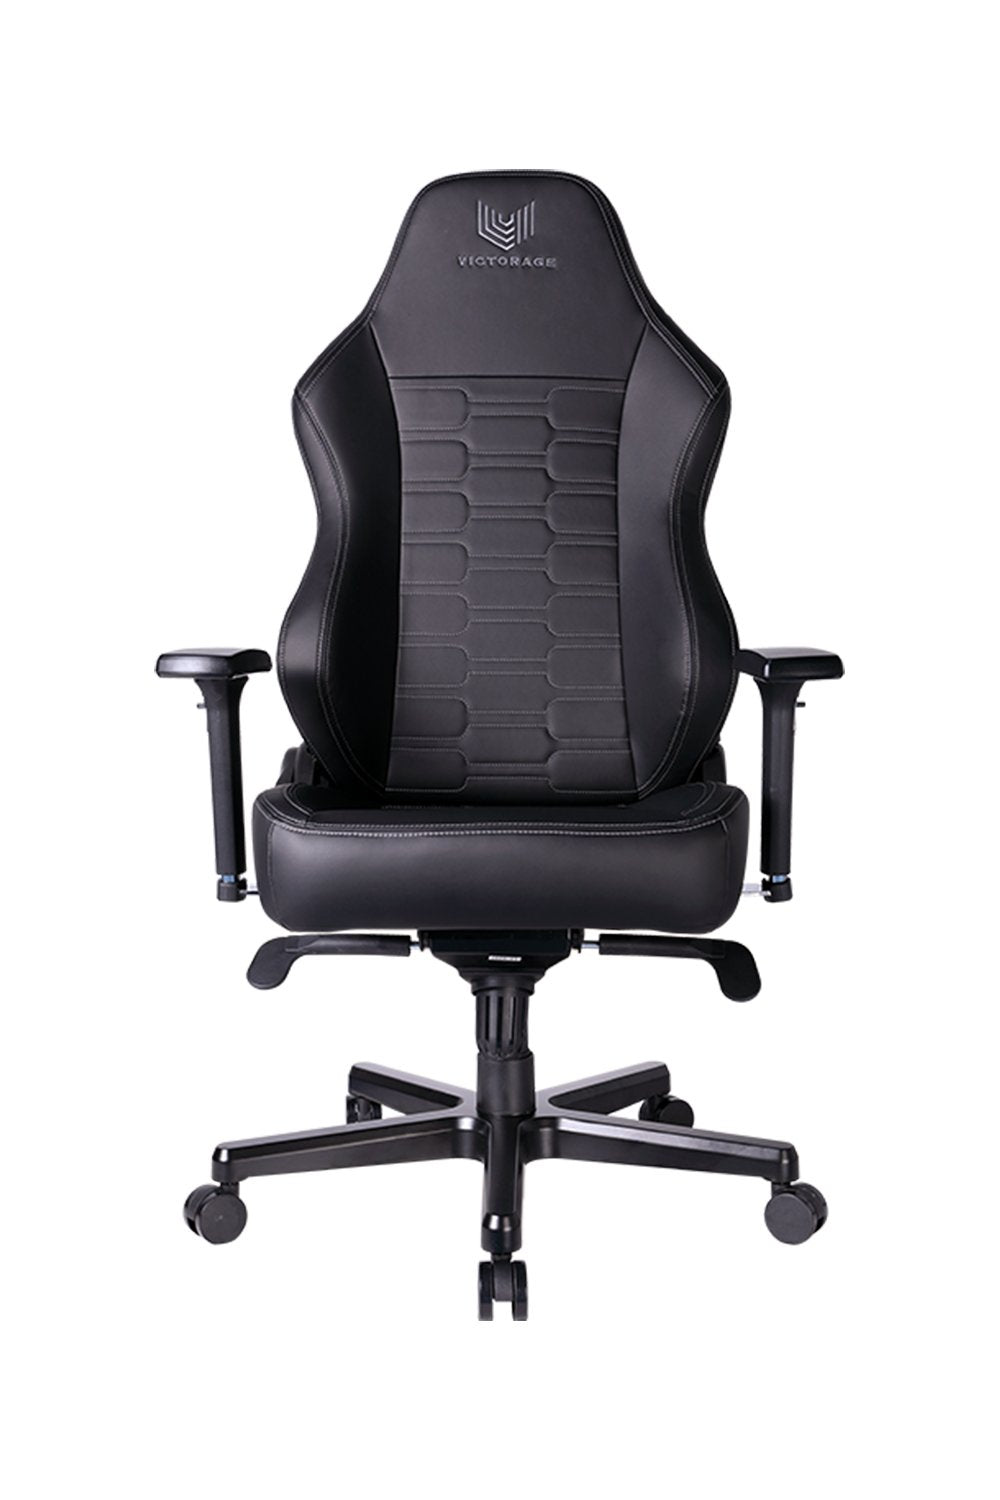 Huracan Gaming Chair